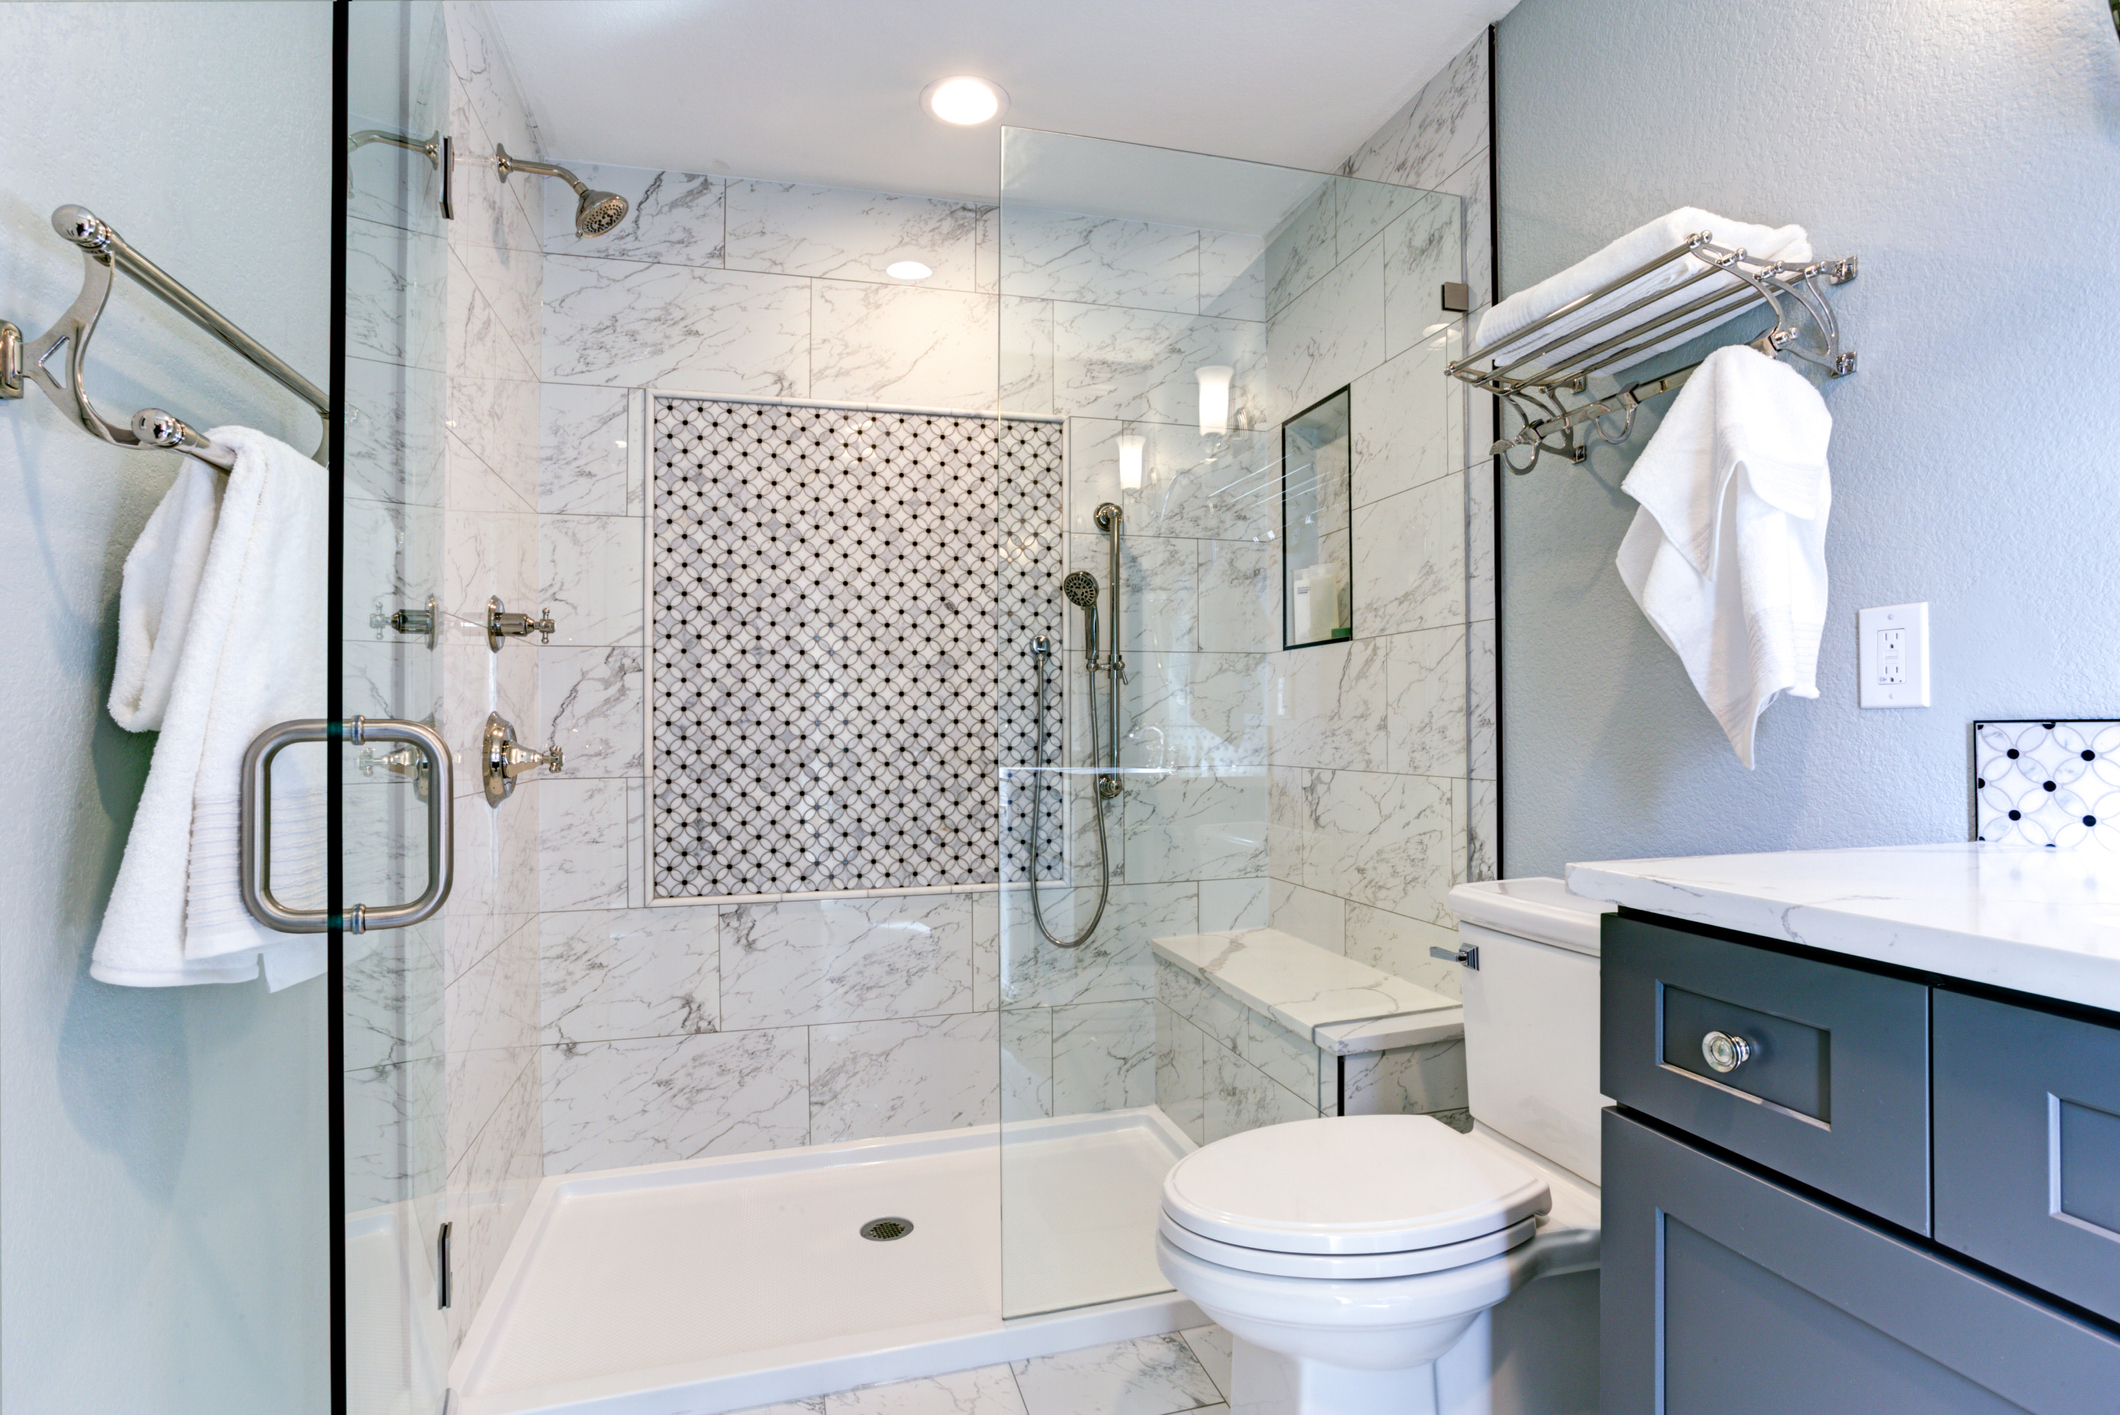 Https Wwwmillionacrescom Real Estate Market Articles 3 Shower Tile Ideas To Use In Your Next Bathroom Remodel